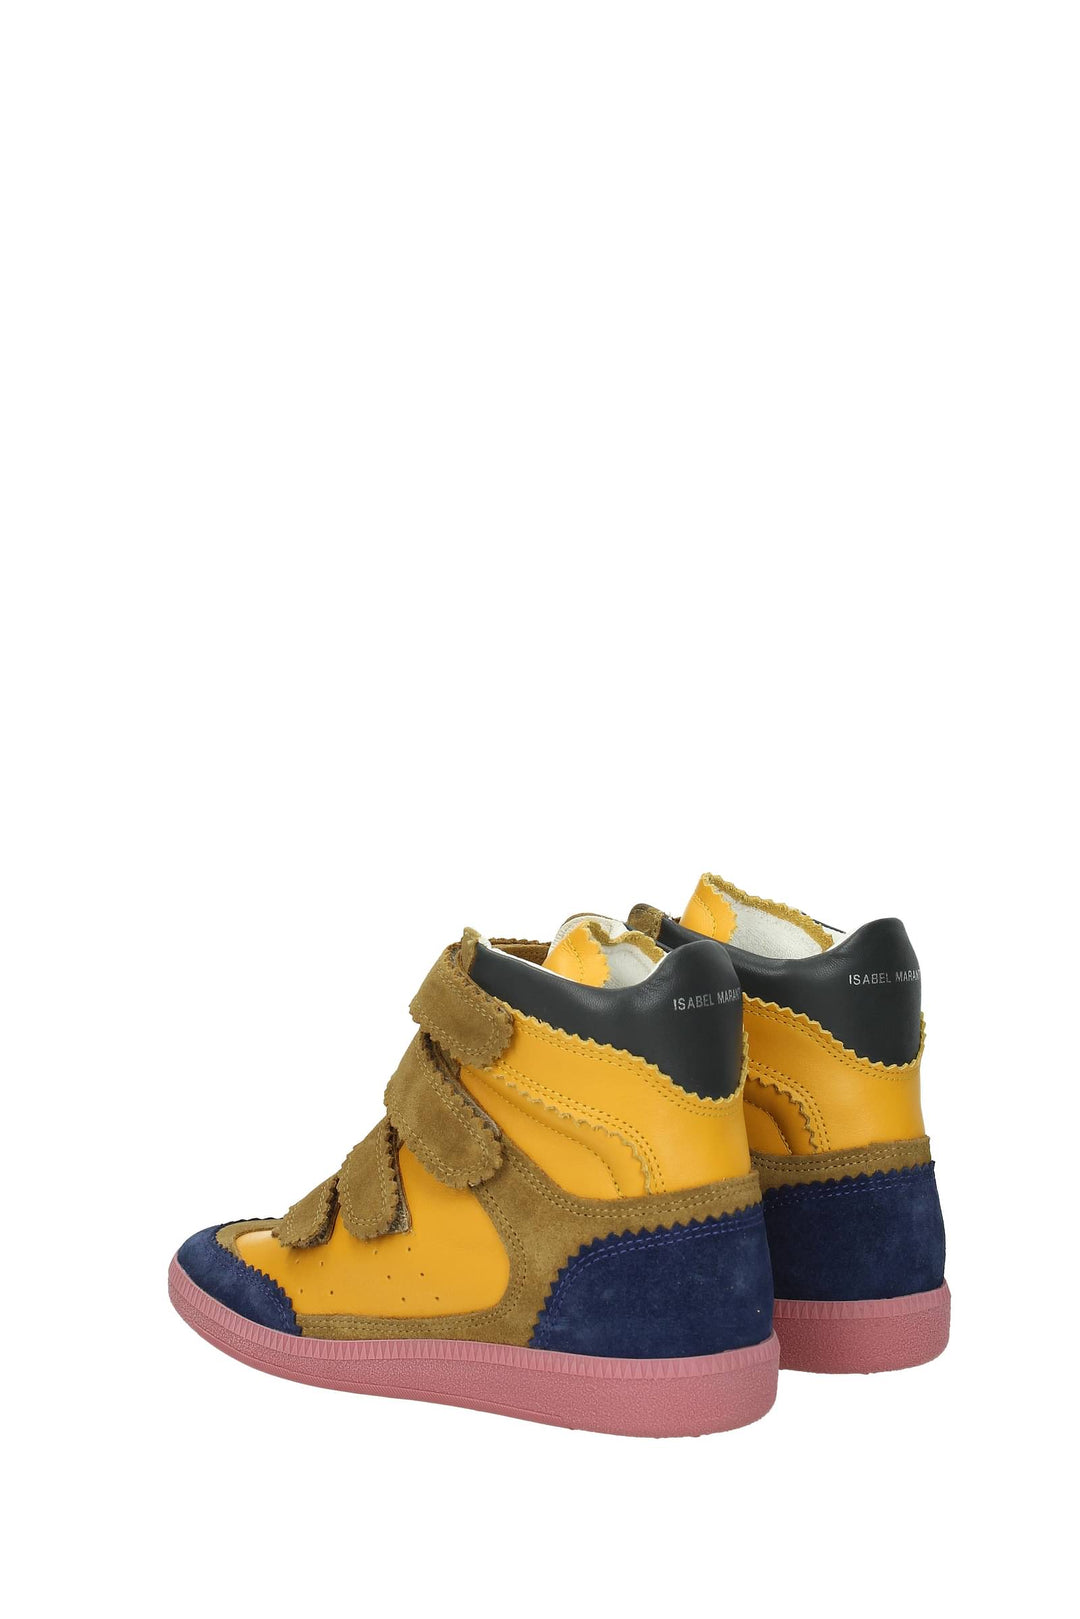 Sneakers Camoscio Giallo - Isabel Marant - Donna